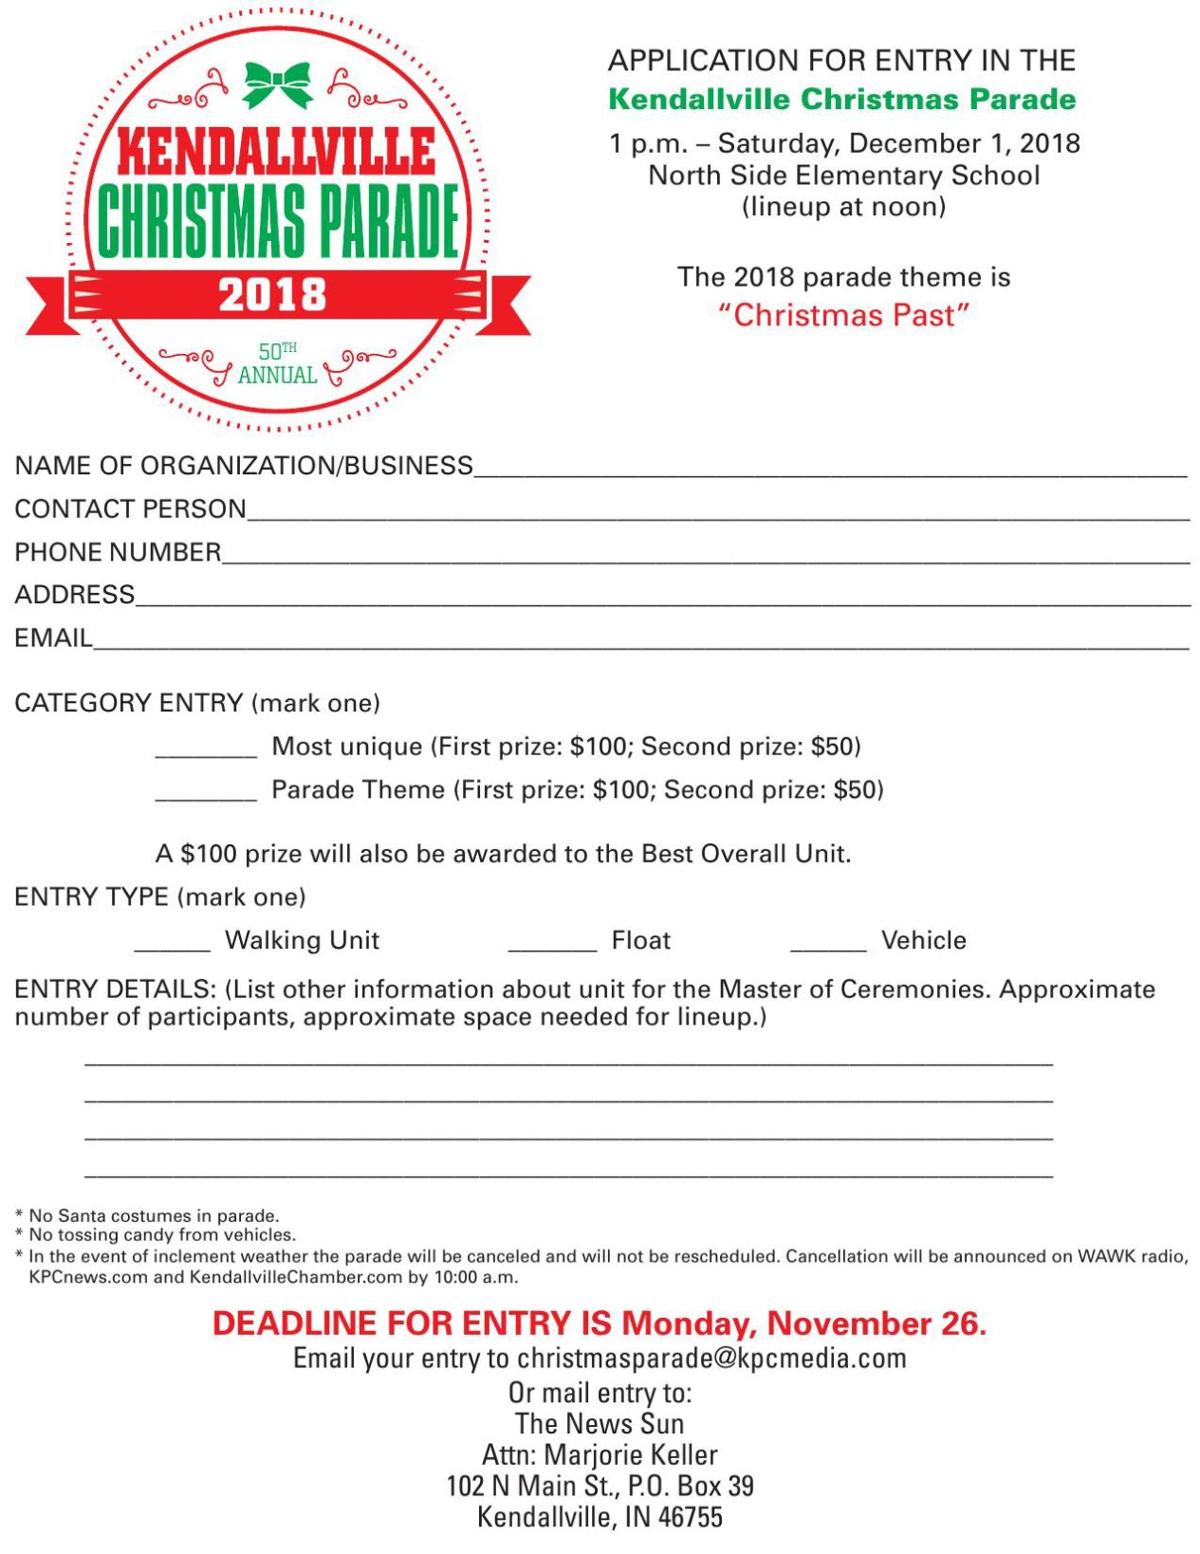 Kendallville Christmas parade application